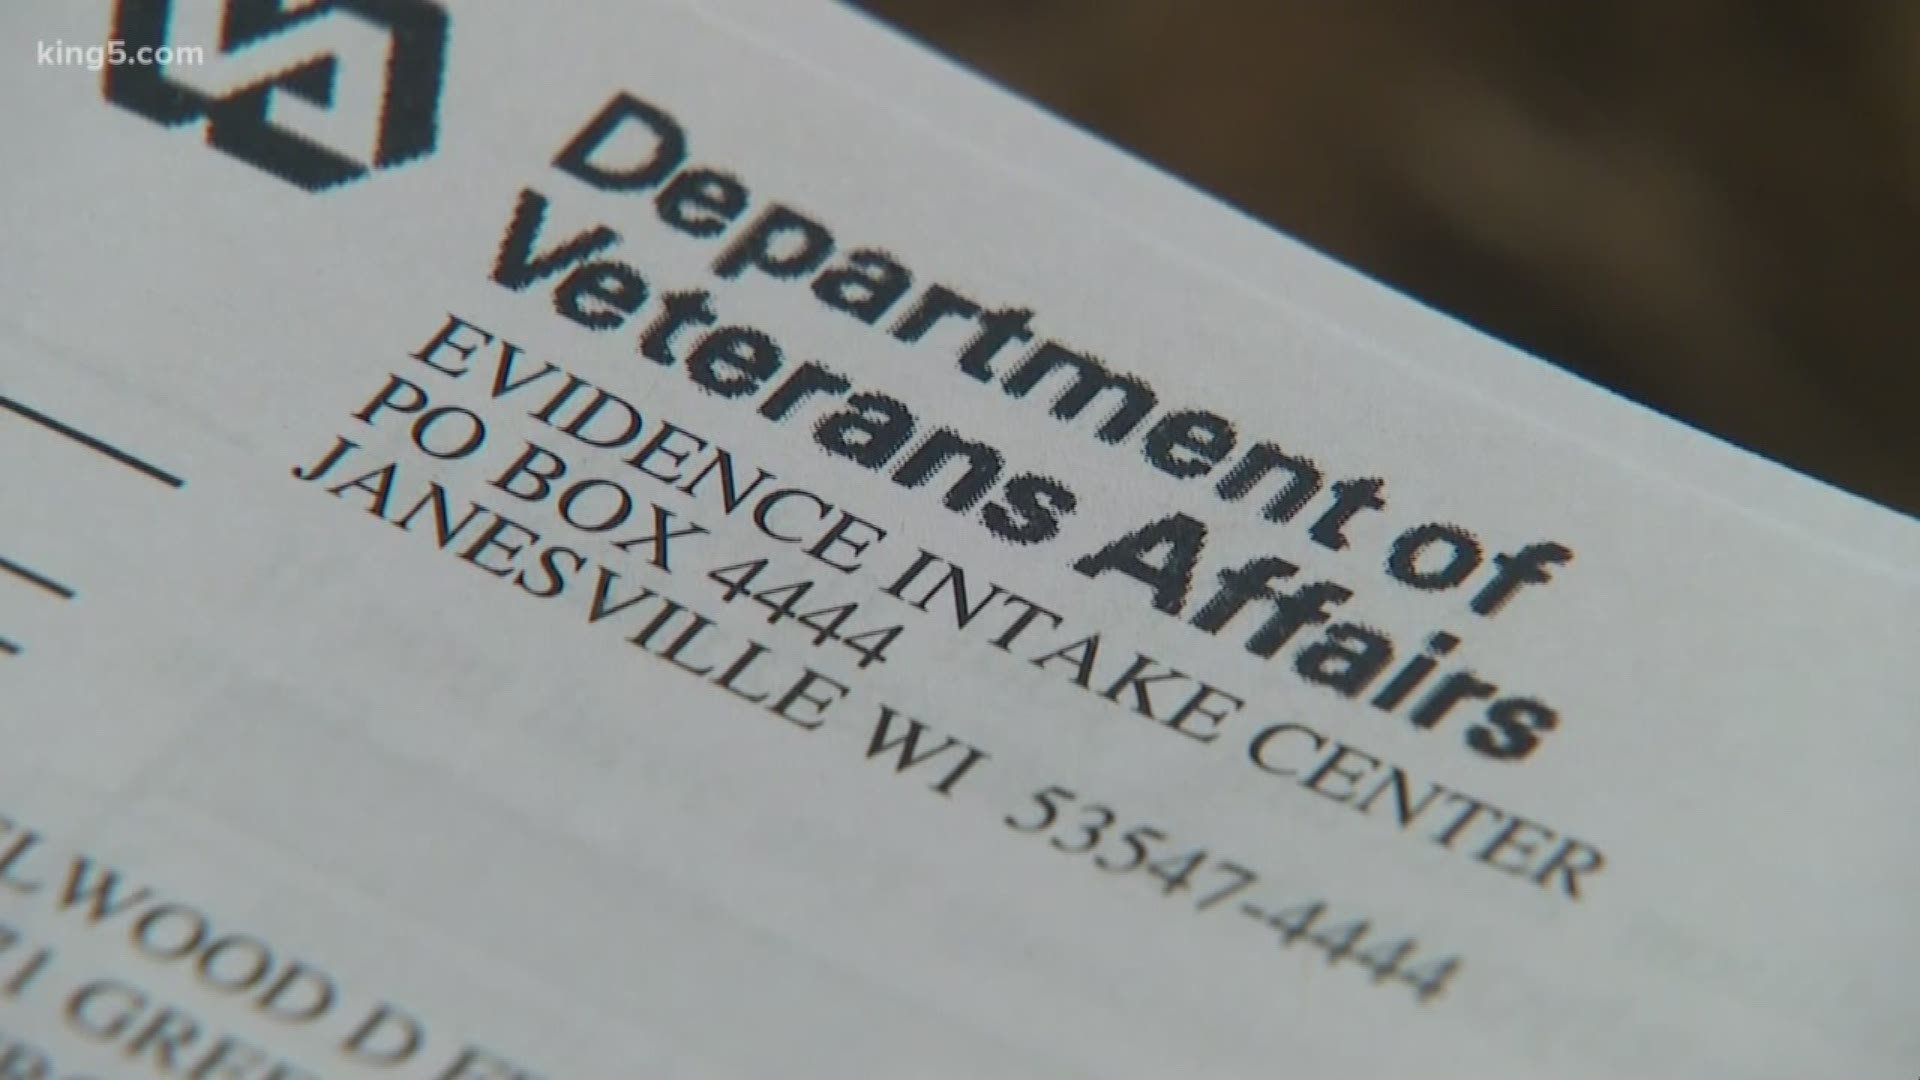 Washington veteran sent classified records of other veterans. KING 5's Greg Copeland reports.